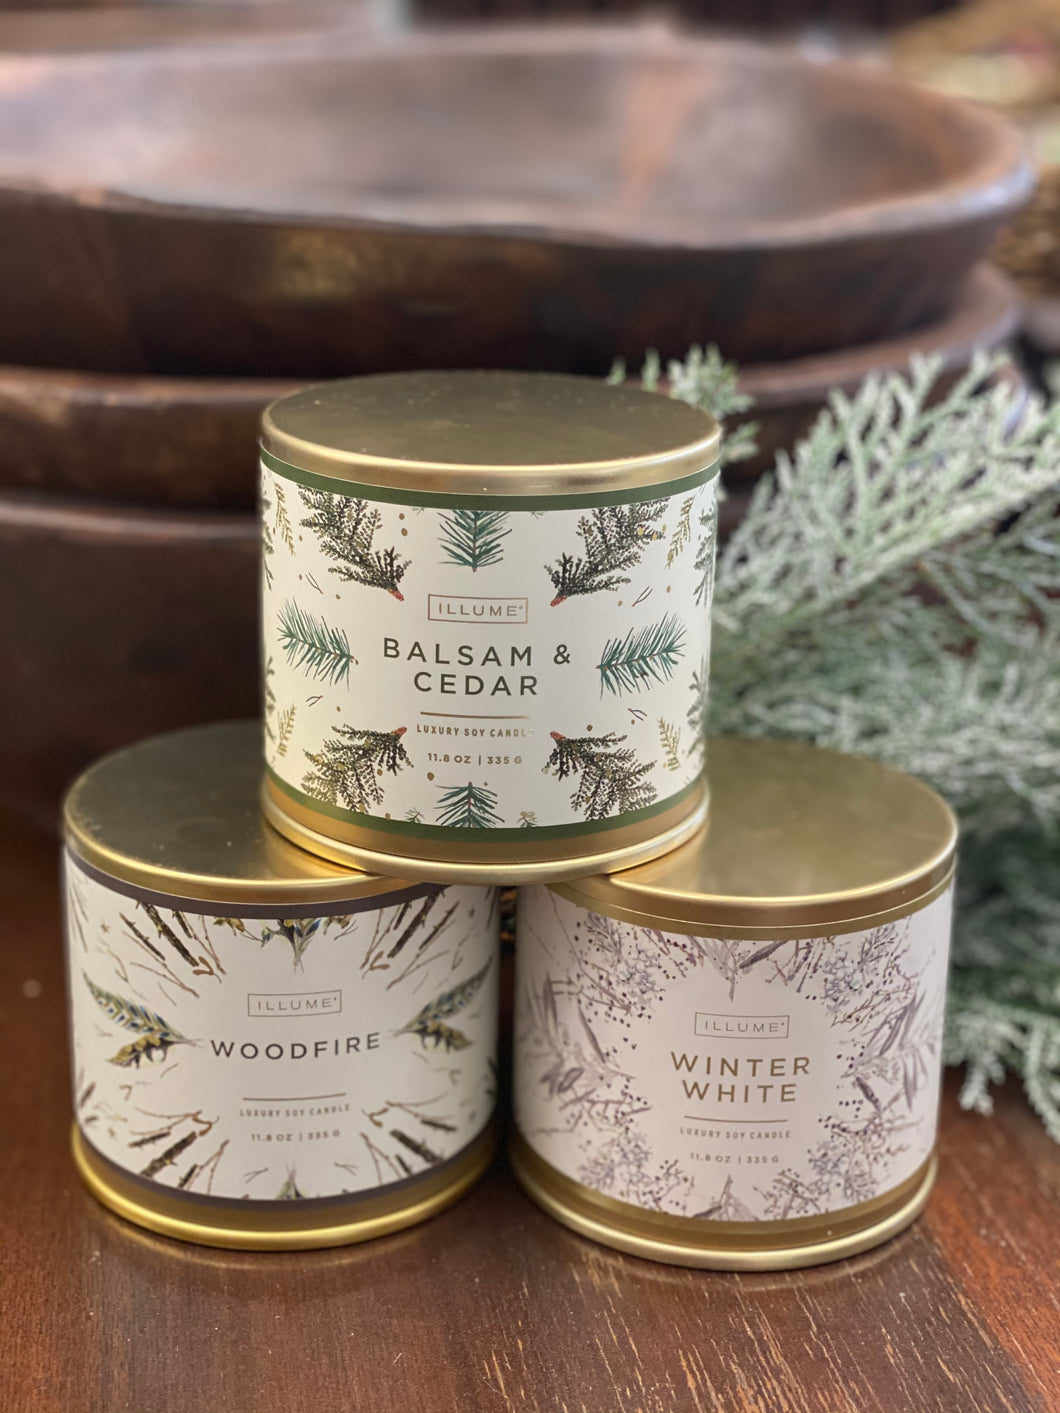 Illume Balsam and Cedar candle